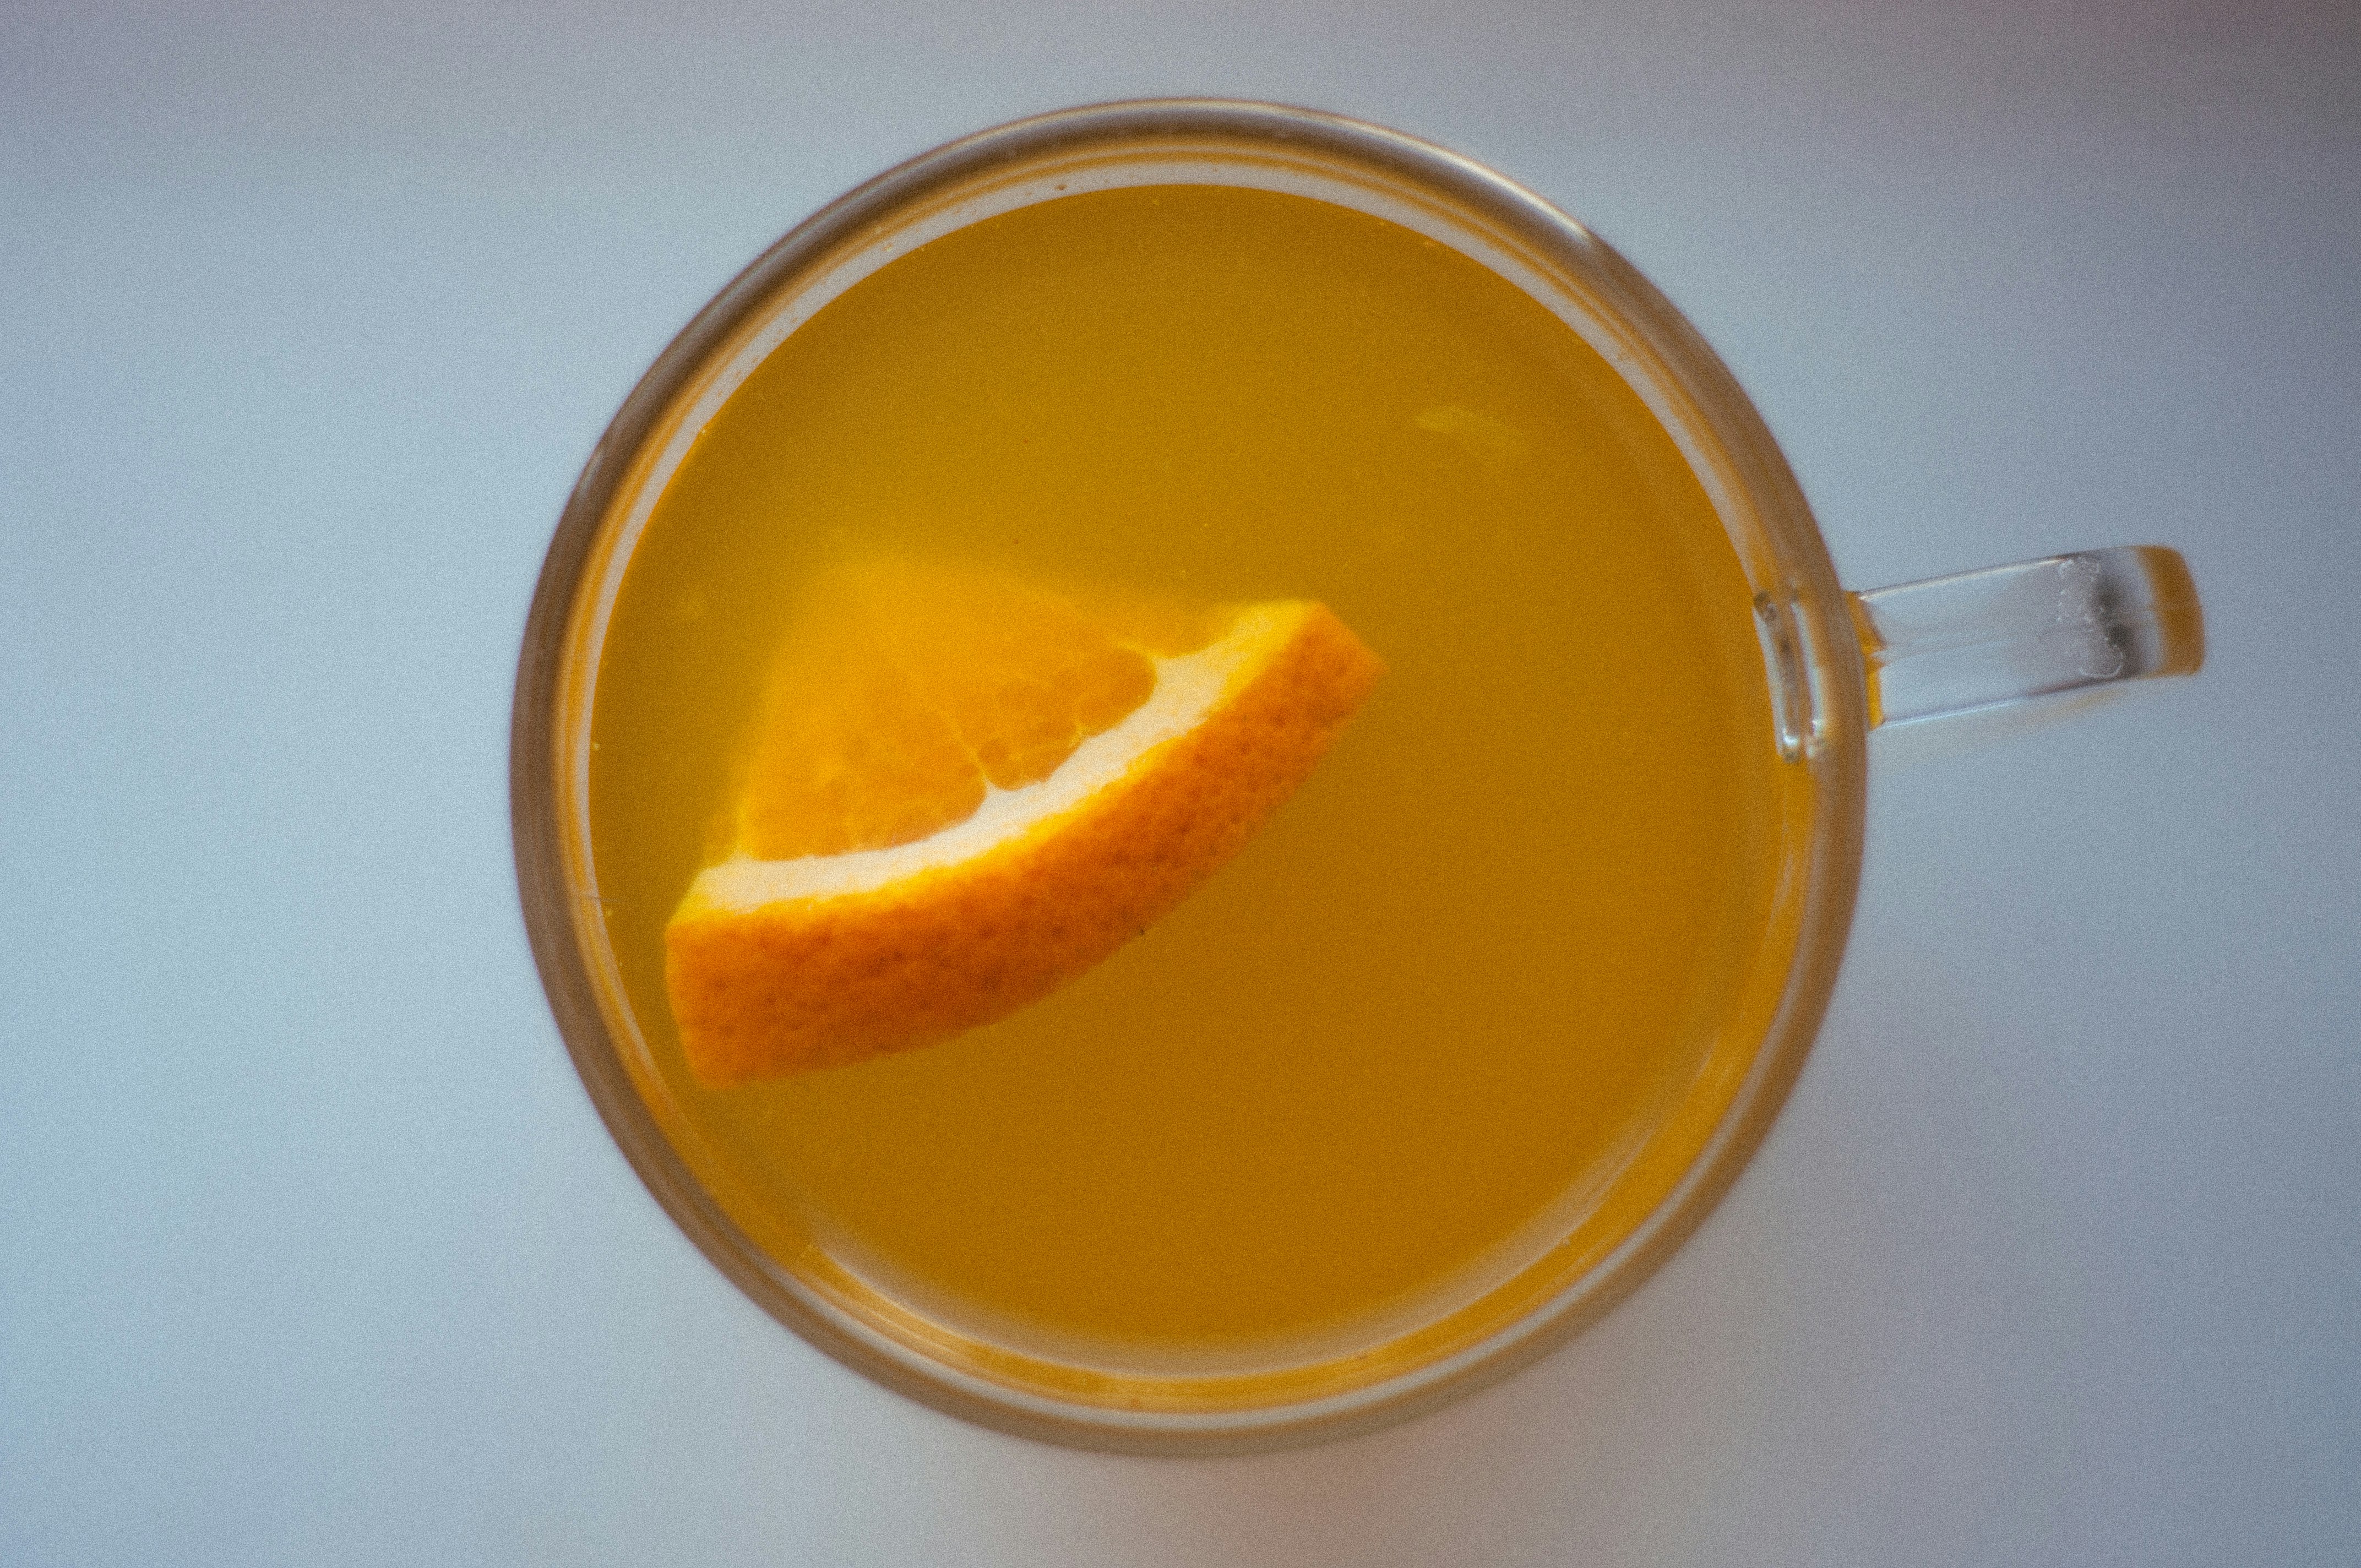 orange juice in clear glass mug